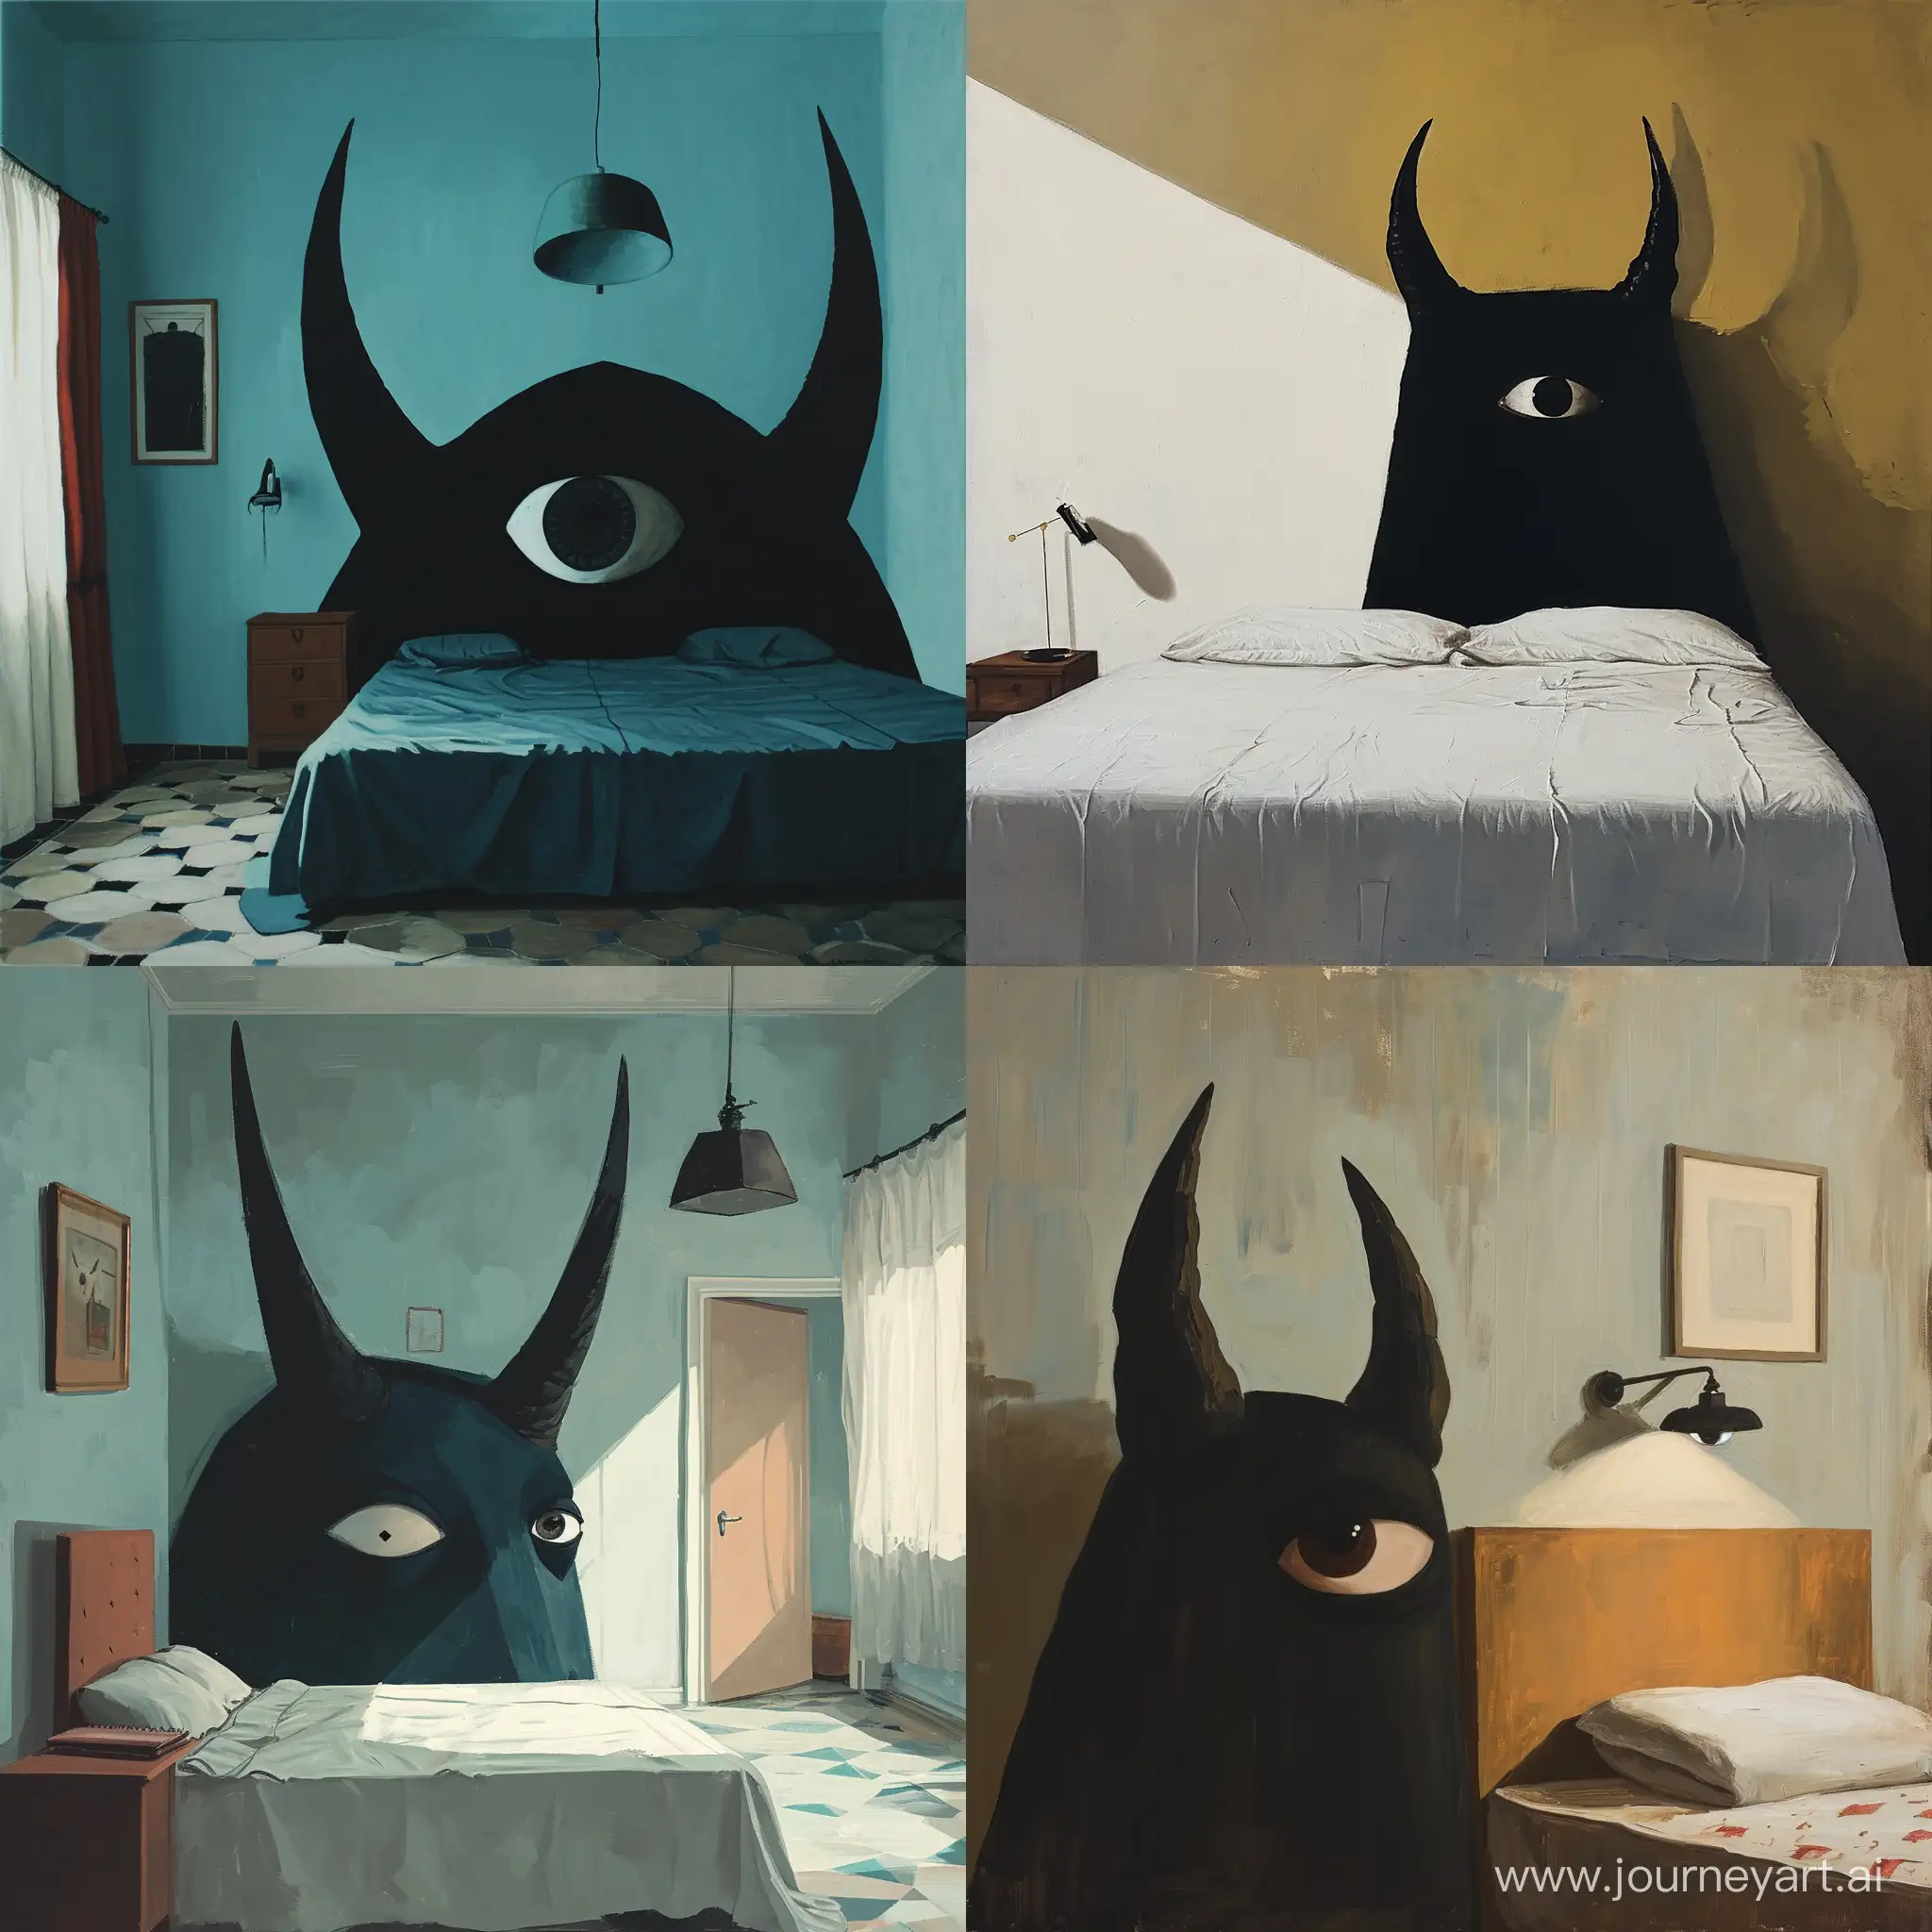 Minimalistic-Dark-Horned-Silhouette-in-Bedroom-with-Eye-Alberto-Mielgo-Style